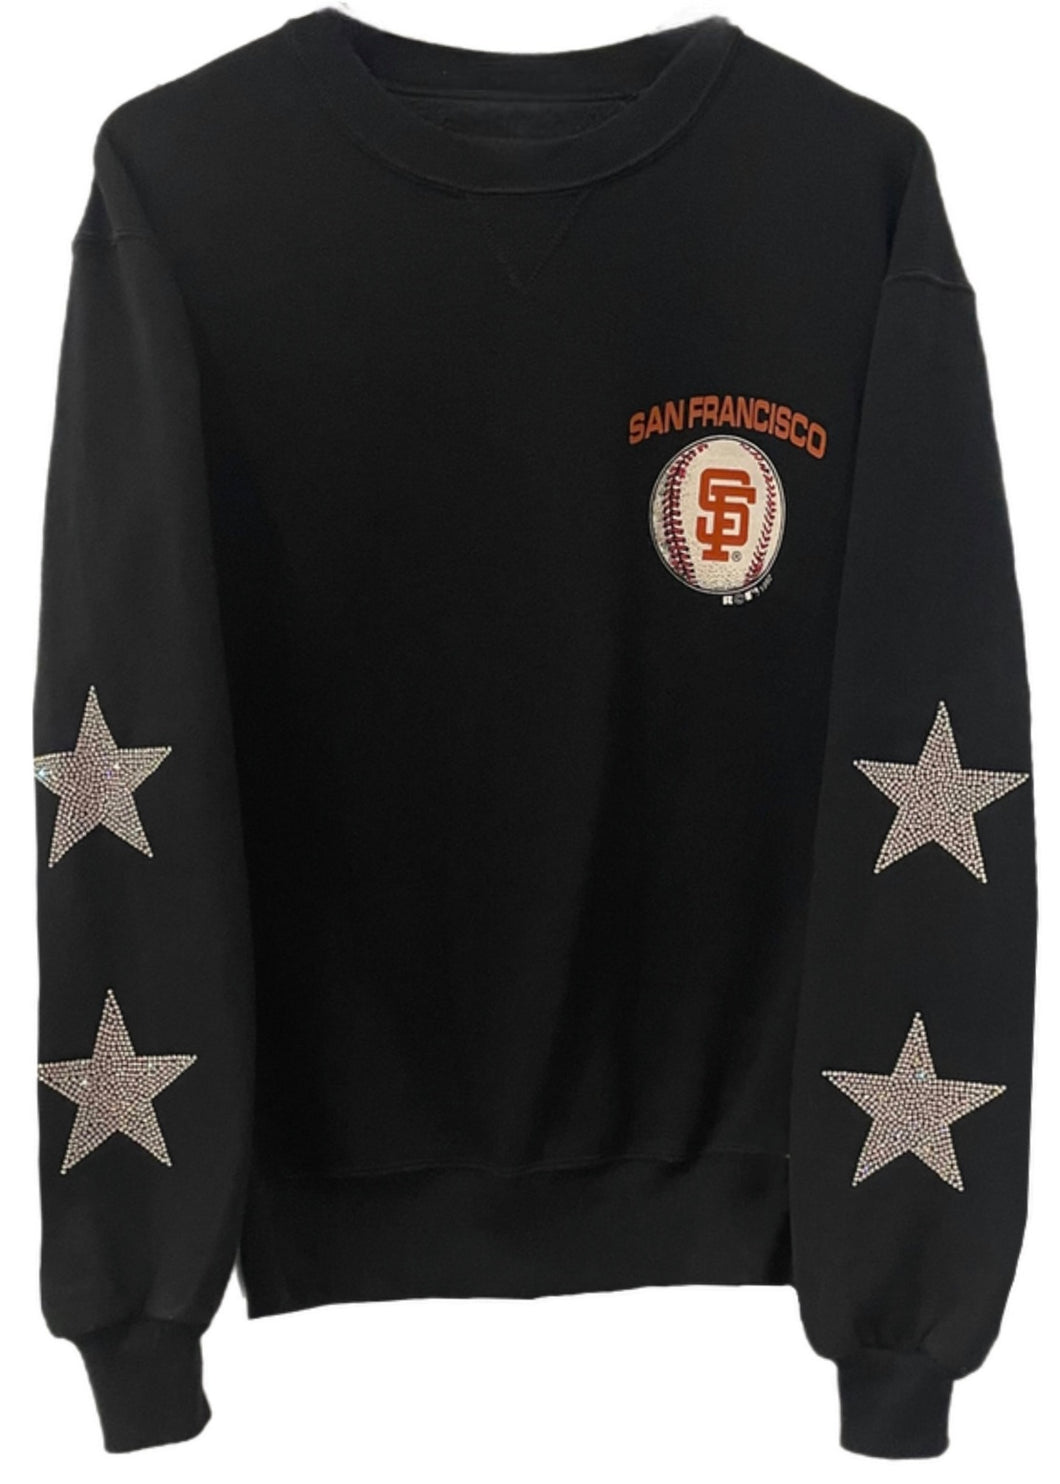 San Franciscio Giants, MLB One of a KIND Vintage Sweatshirt with Crystal Star Design.